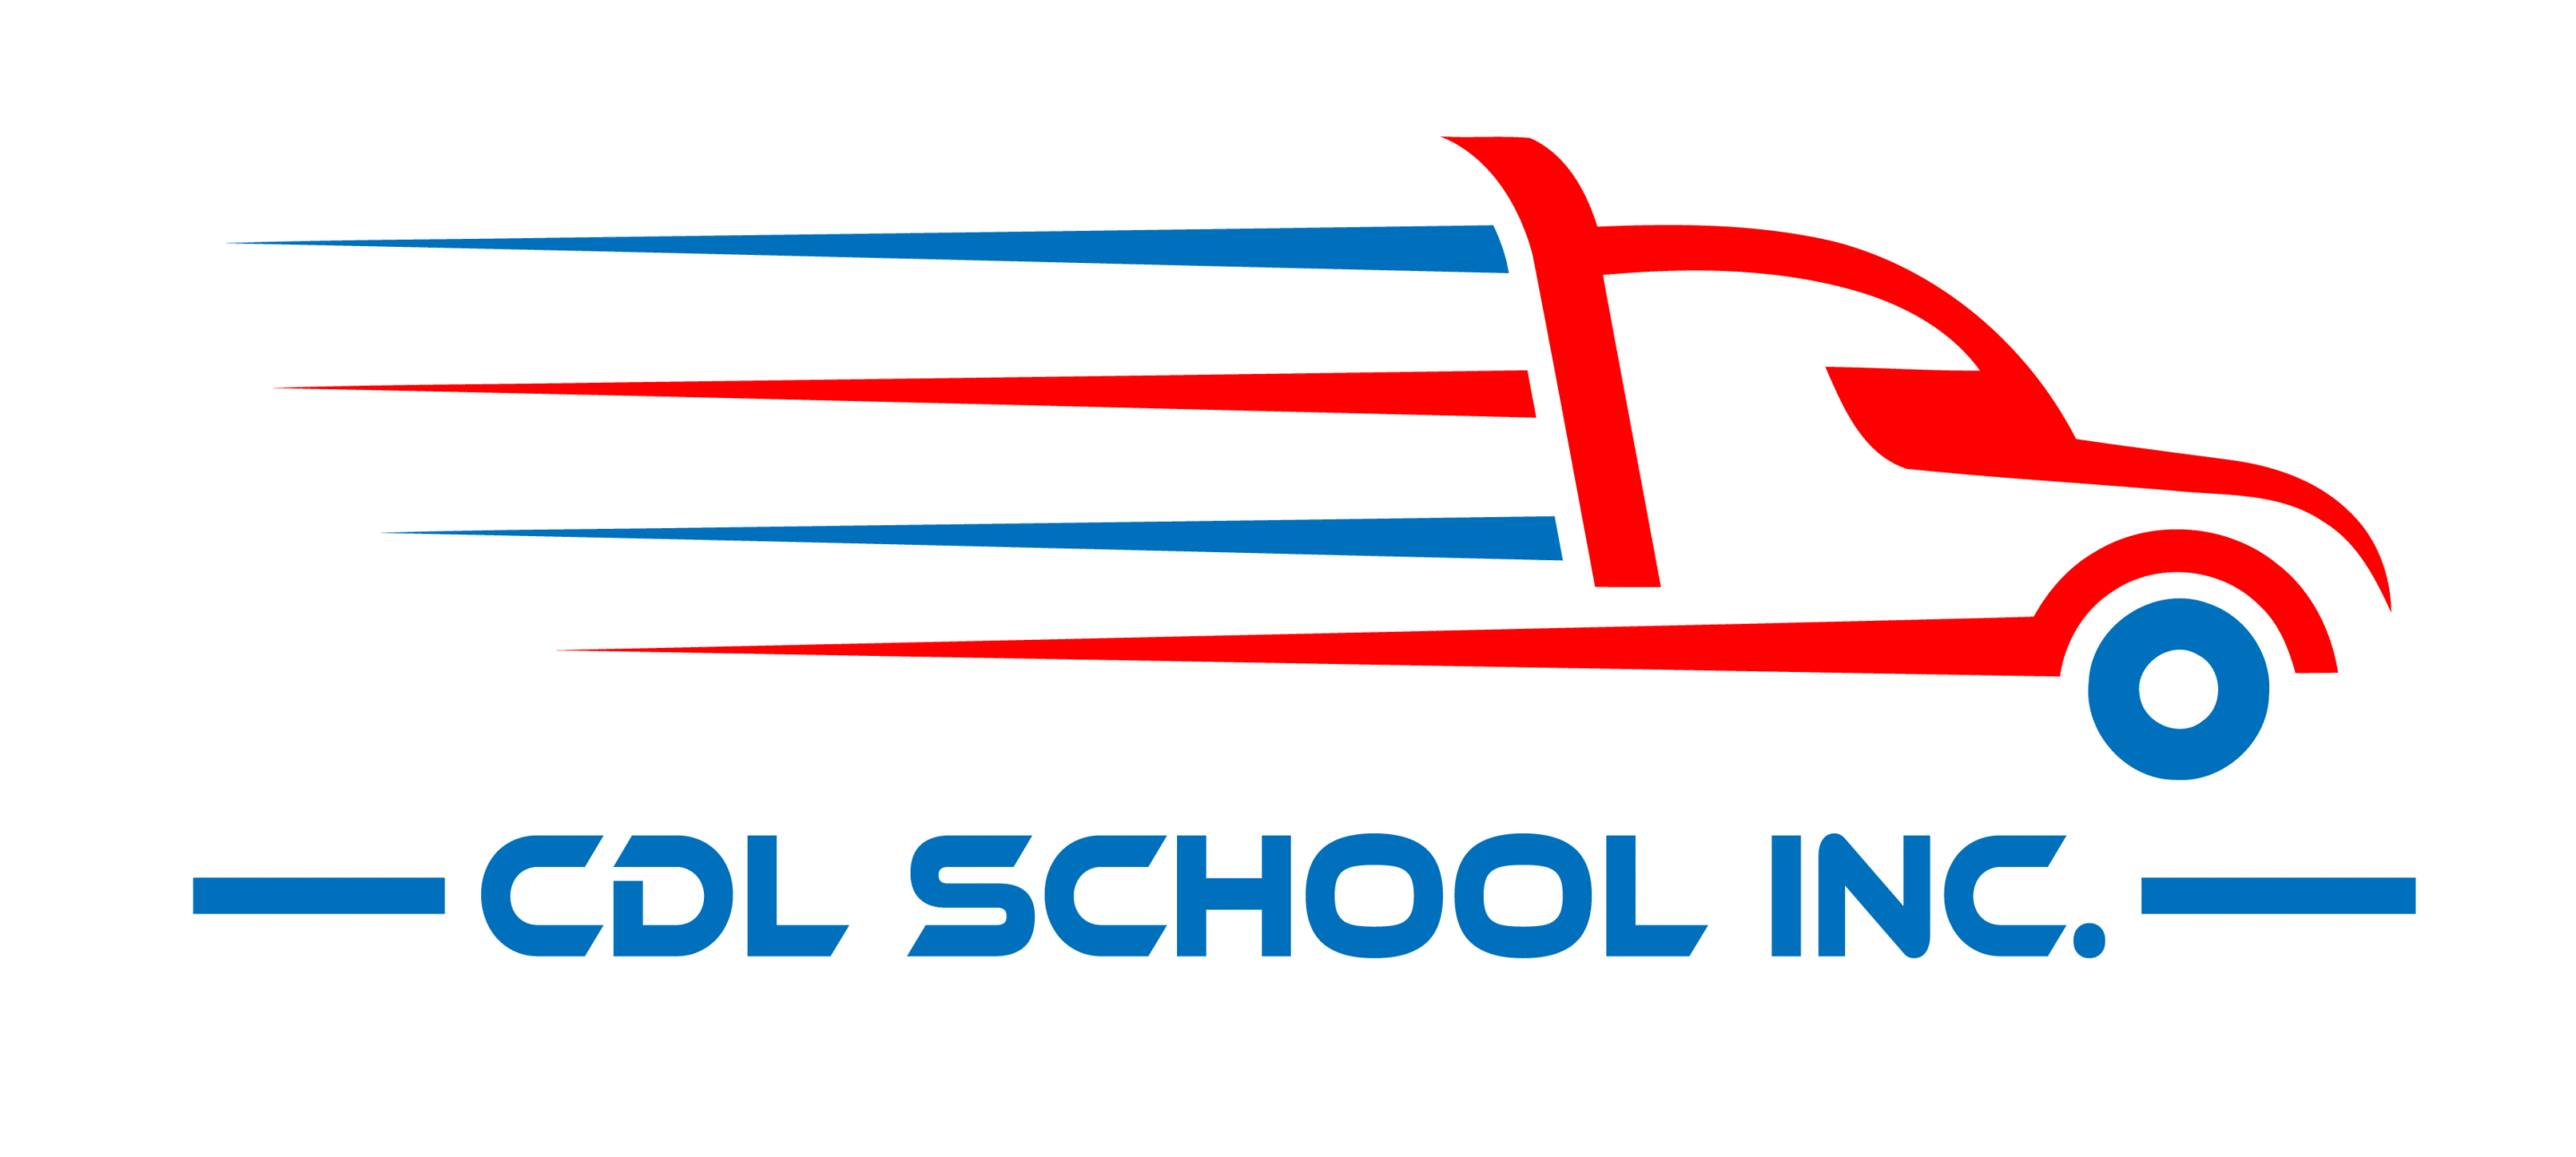 CDL School Inc.